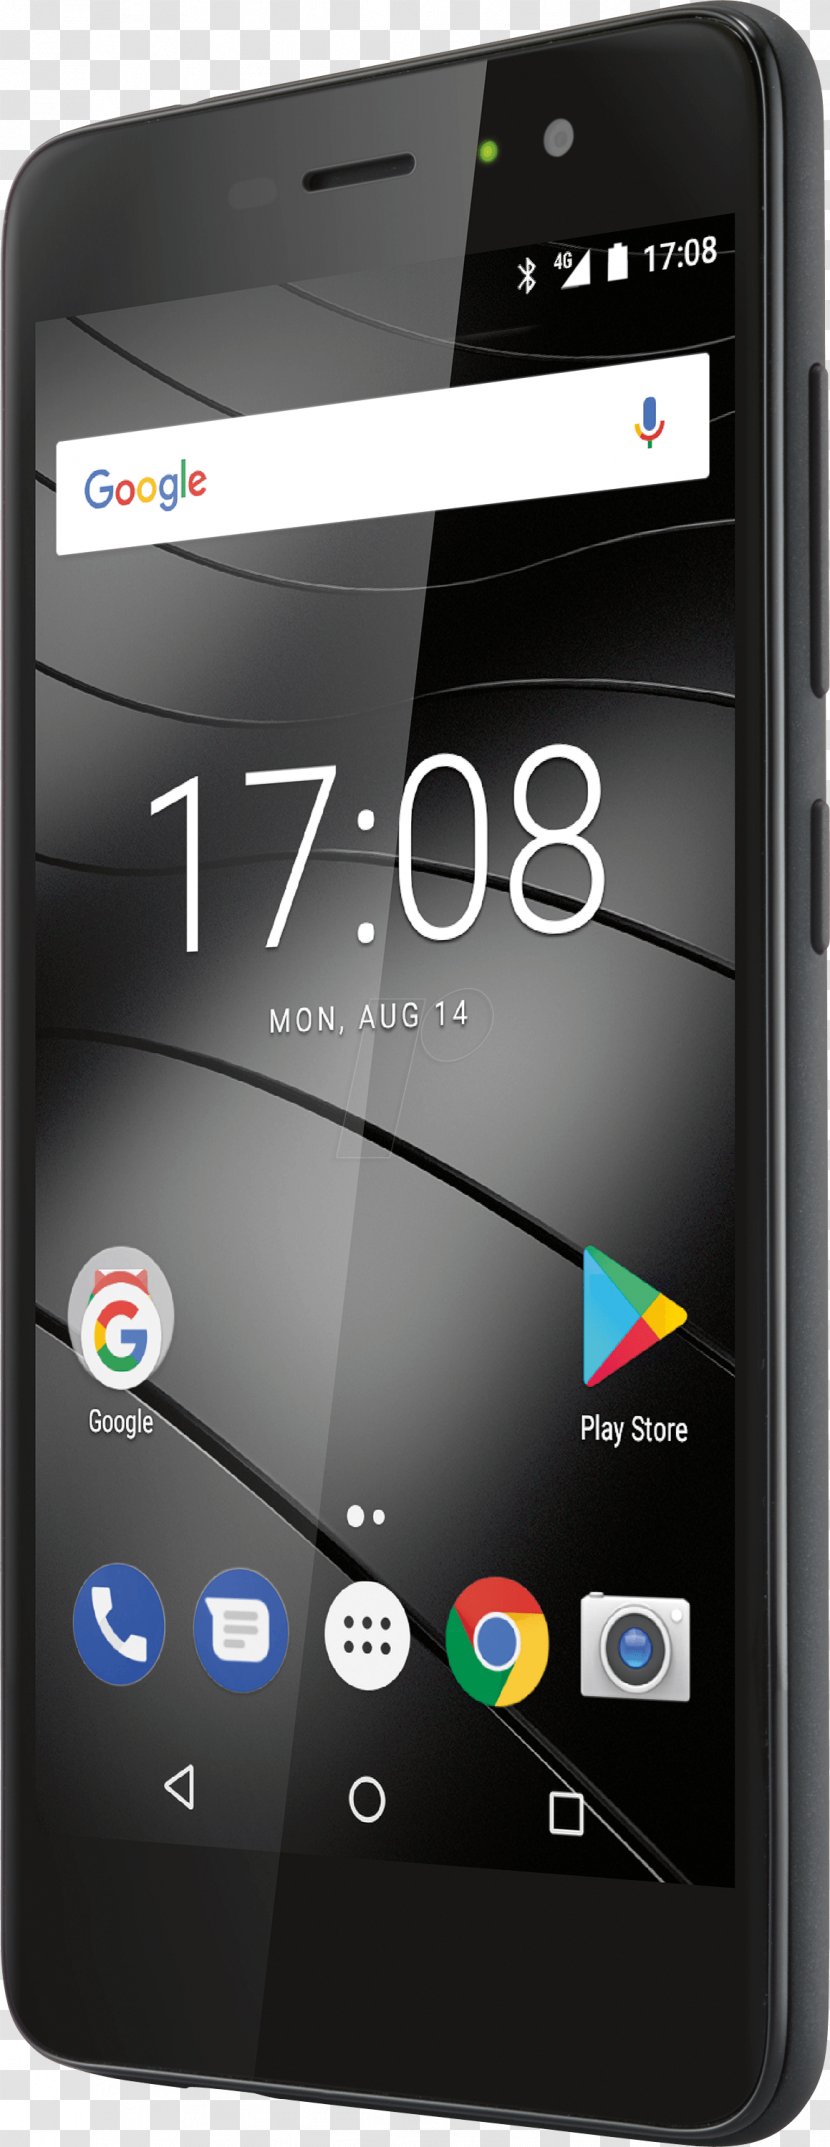 Gigaset Volks-smartphone GS270 LTE Smartphone 13.2 Cm 1.5 Core Feature Phone Dual SIM Phicomm Energy 4S 12.7 (5 ) 1.3 GHzQuad Core16 GB13 MPixAnd - Communication Device Transparent PNG